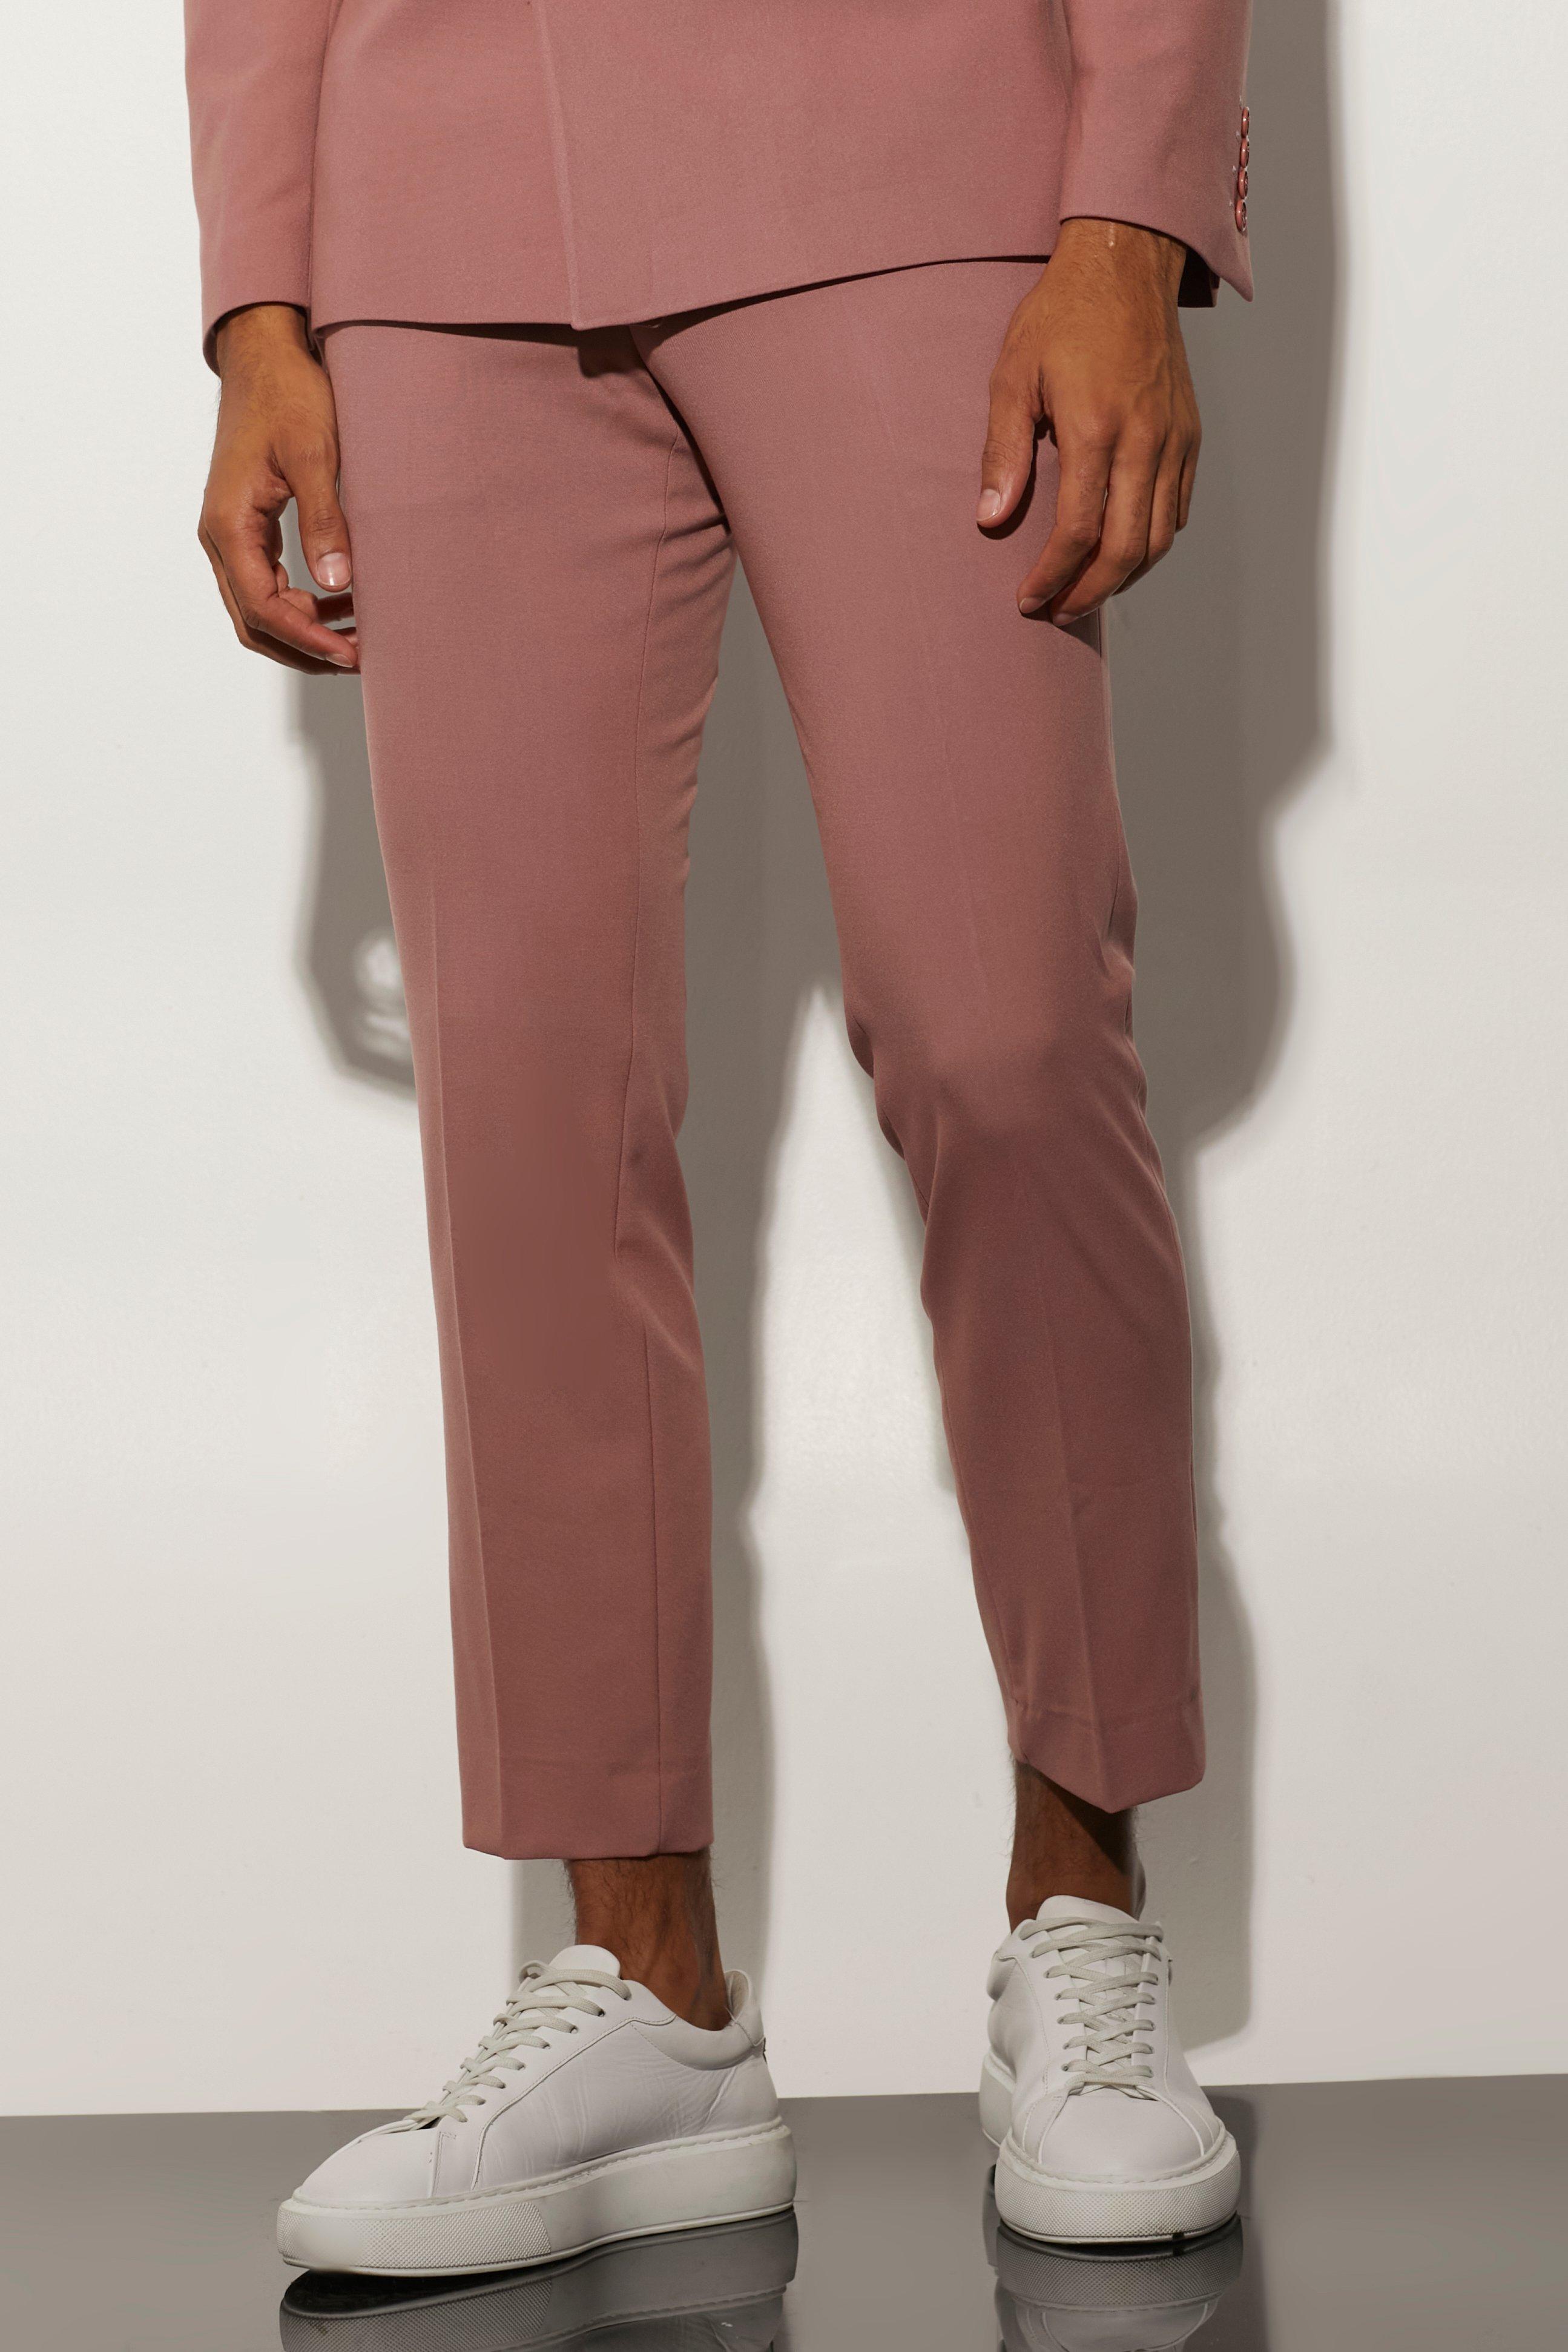 pantalon de costume slim court homme - rose - 28r, rose